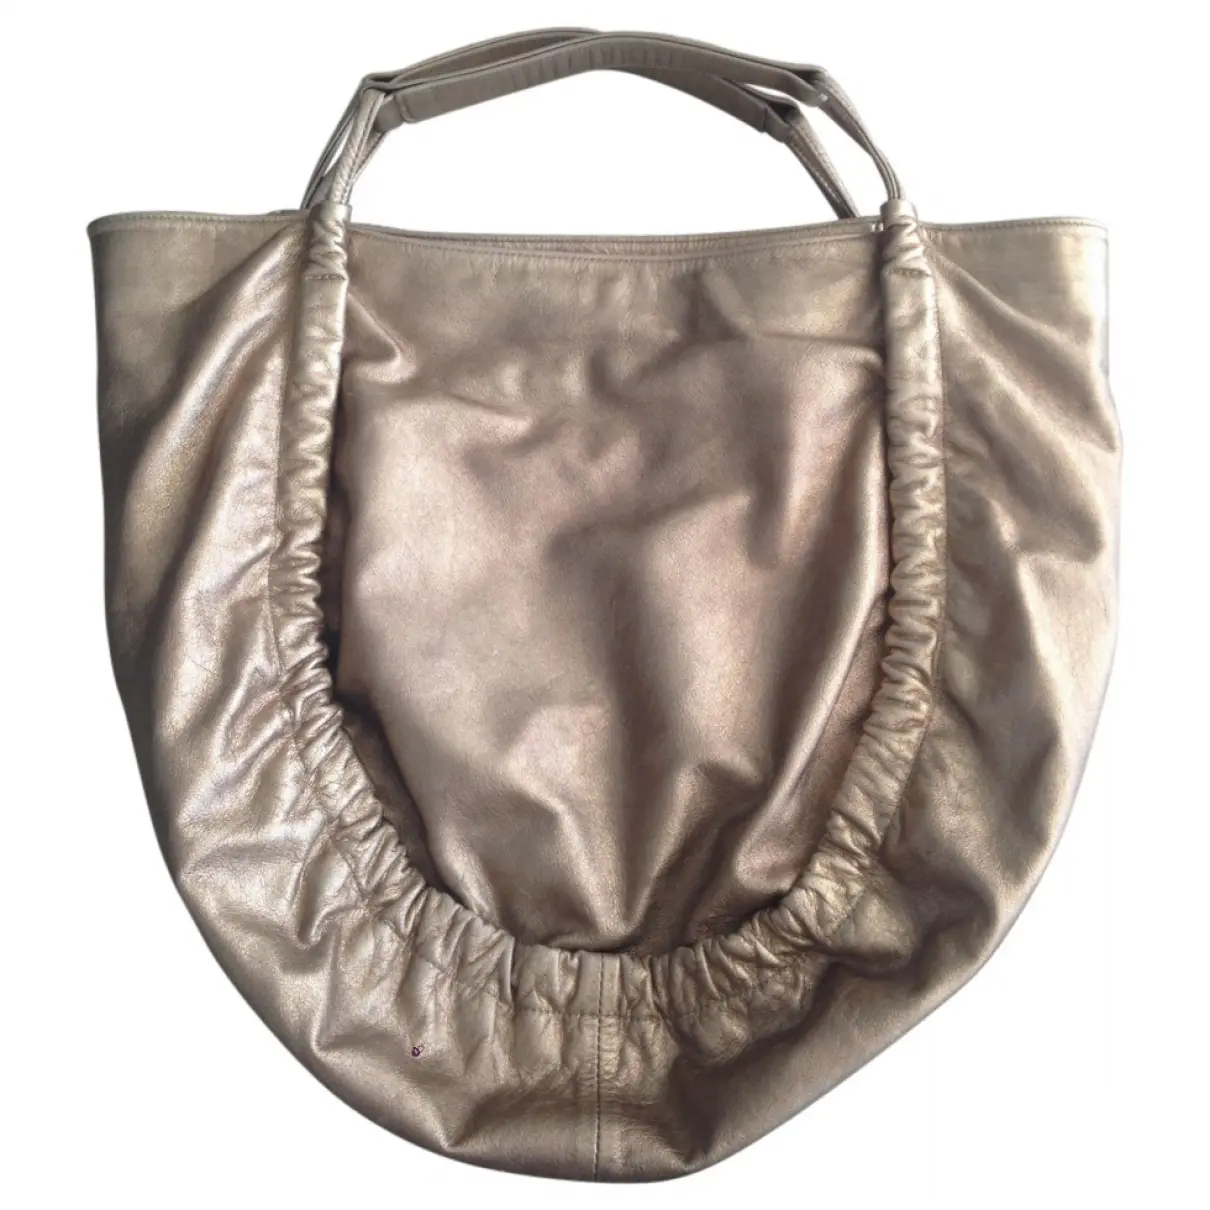 Leather handbag Brontibay